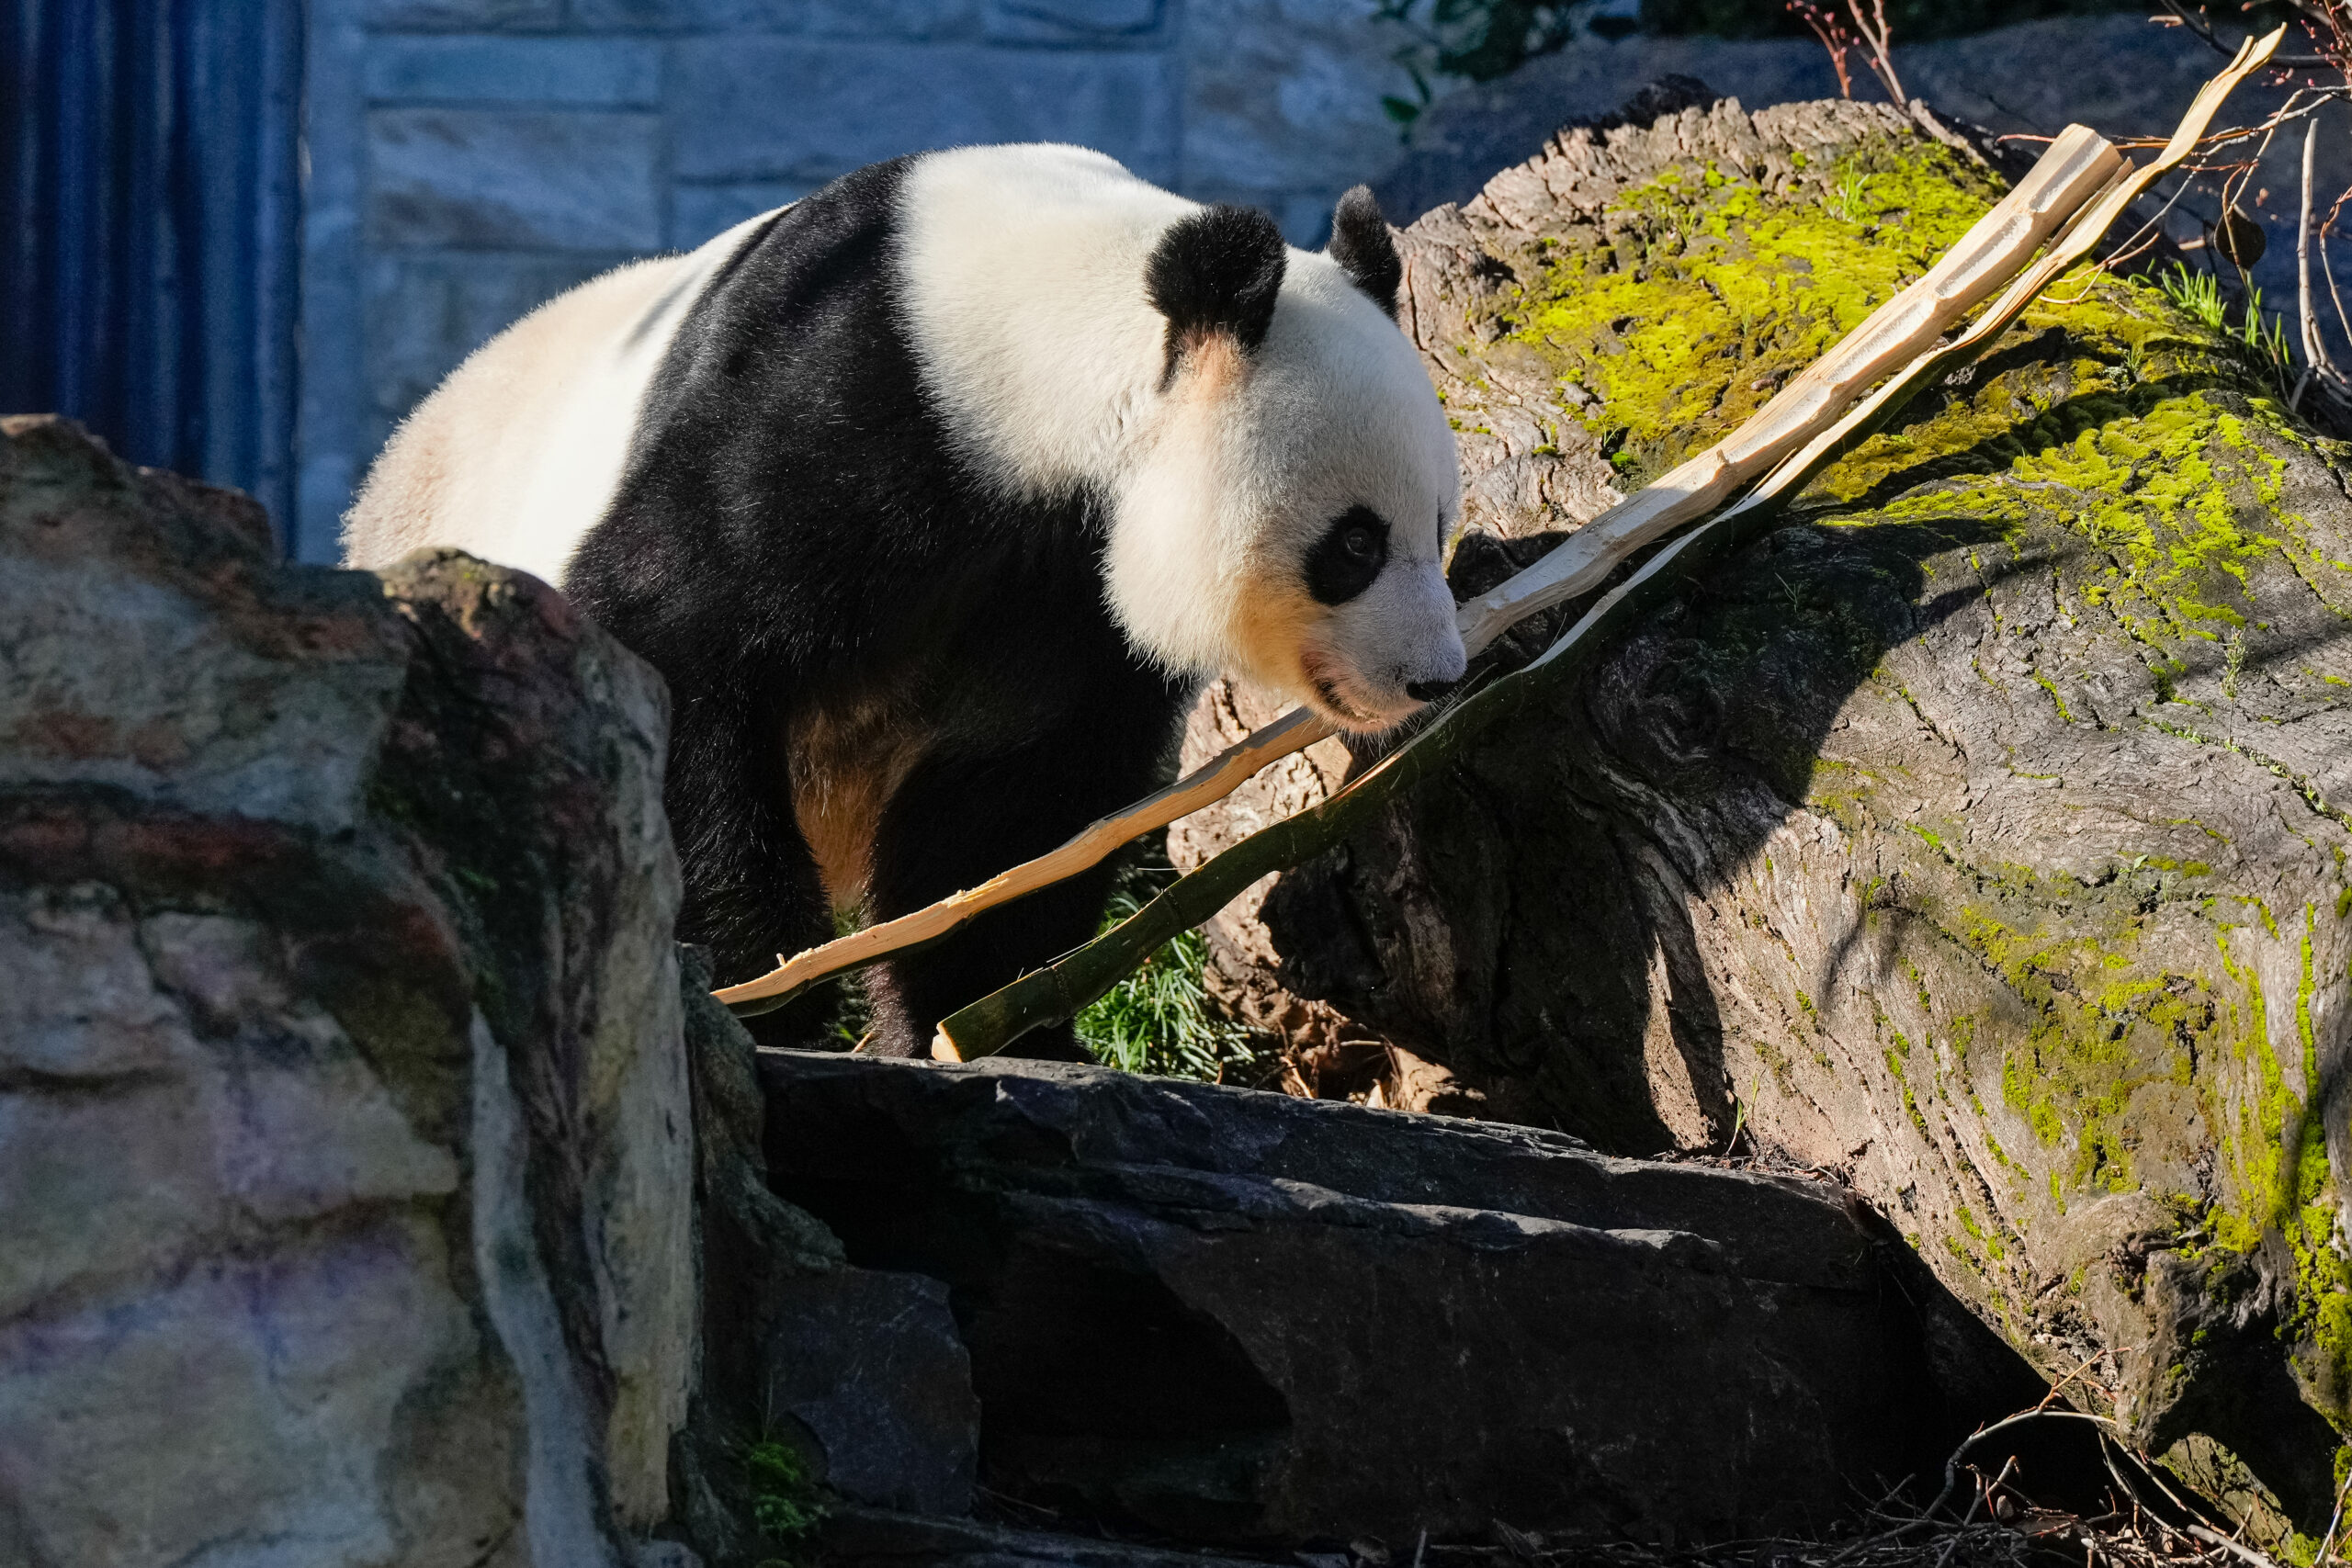 China to replace Australia's popular giant pandas